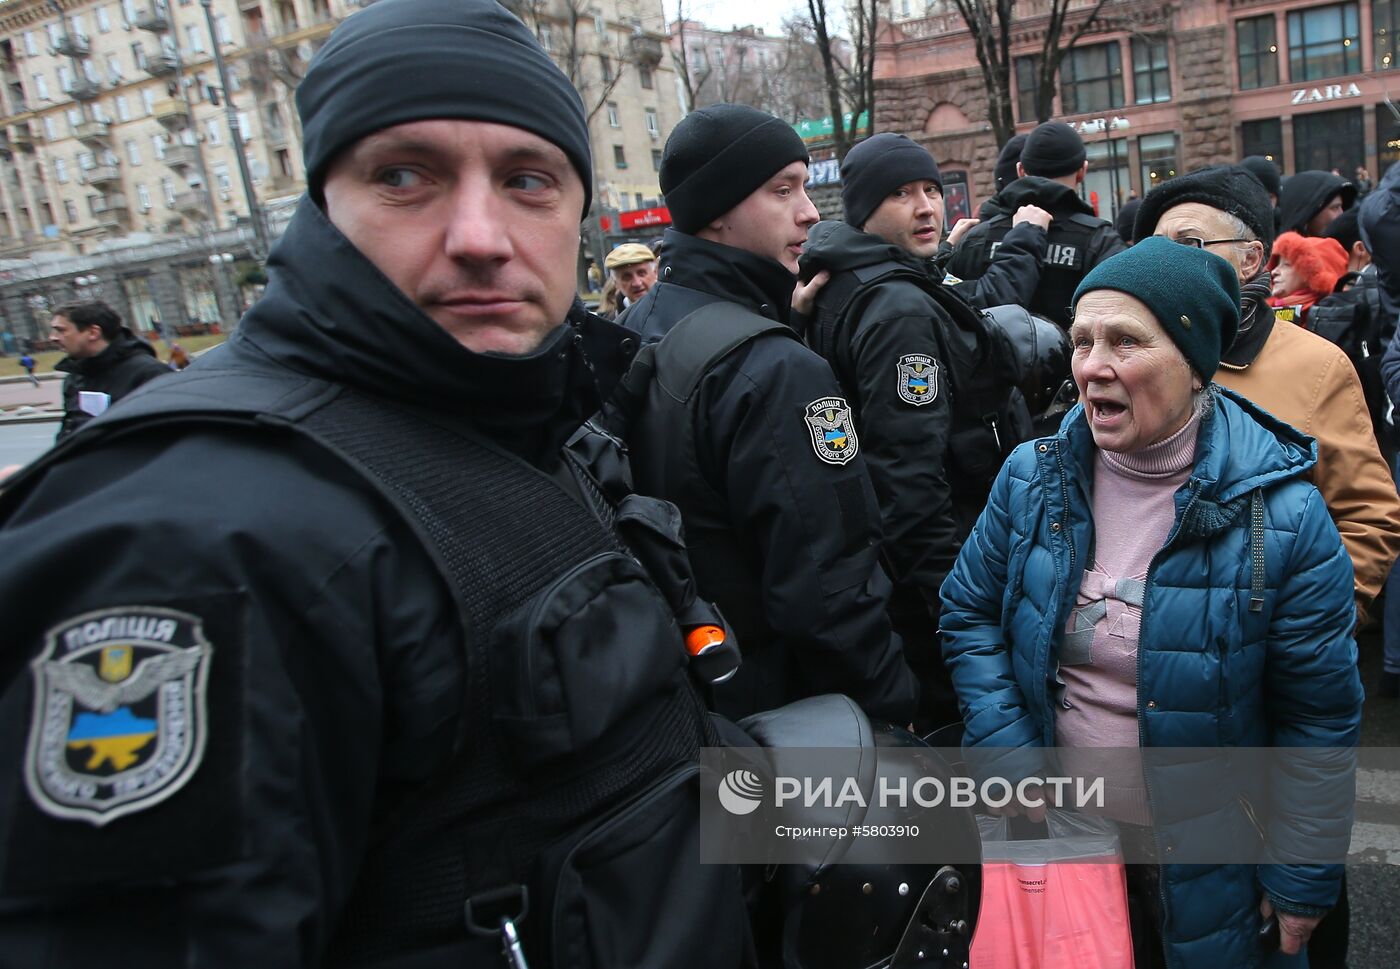 Акция против незаконной застройки Киева